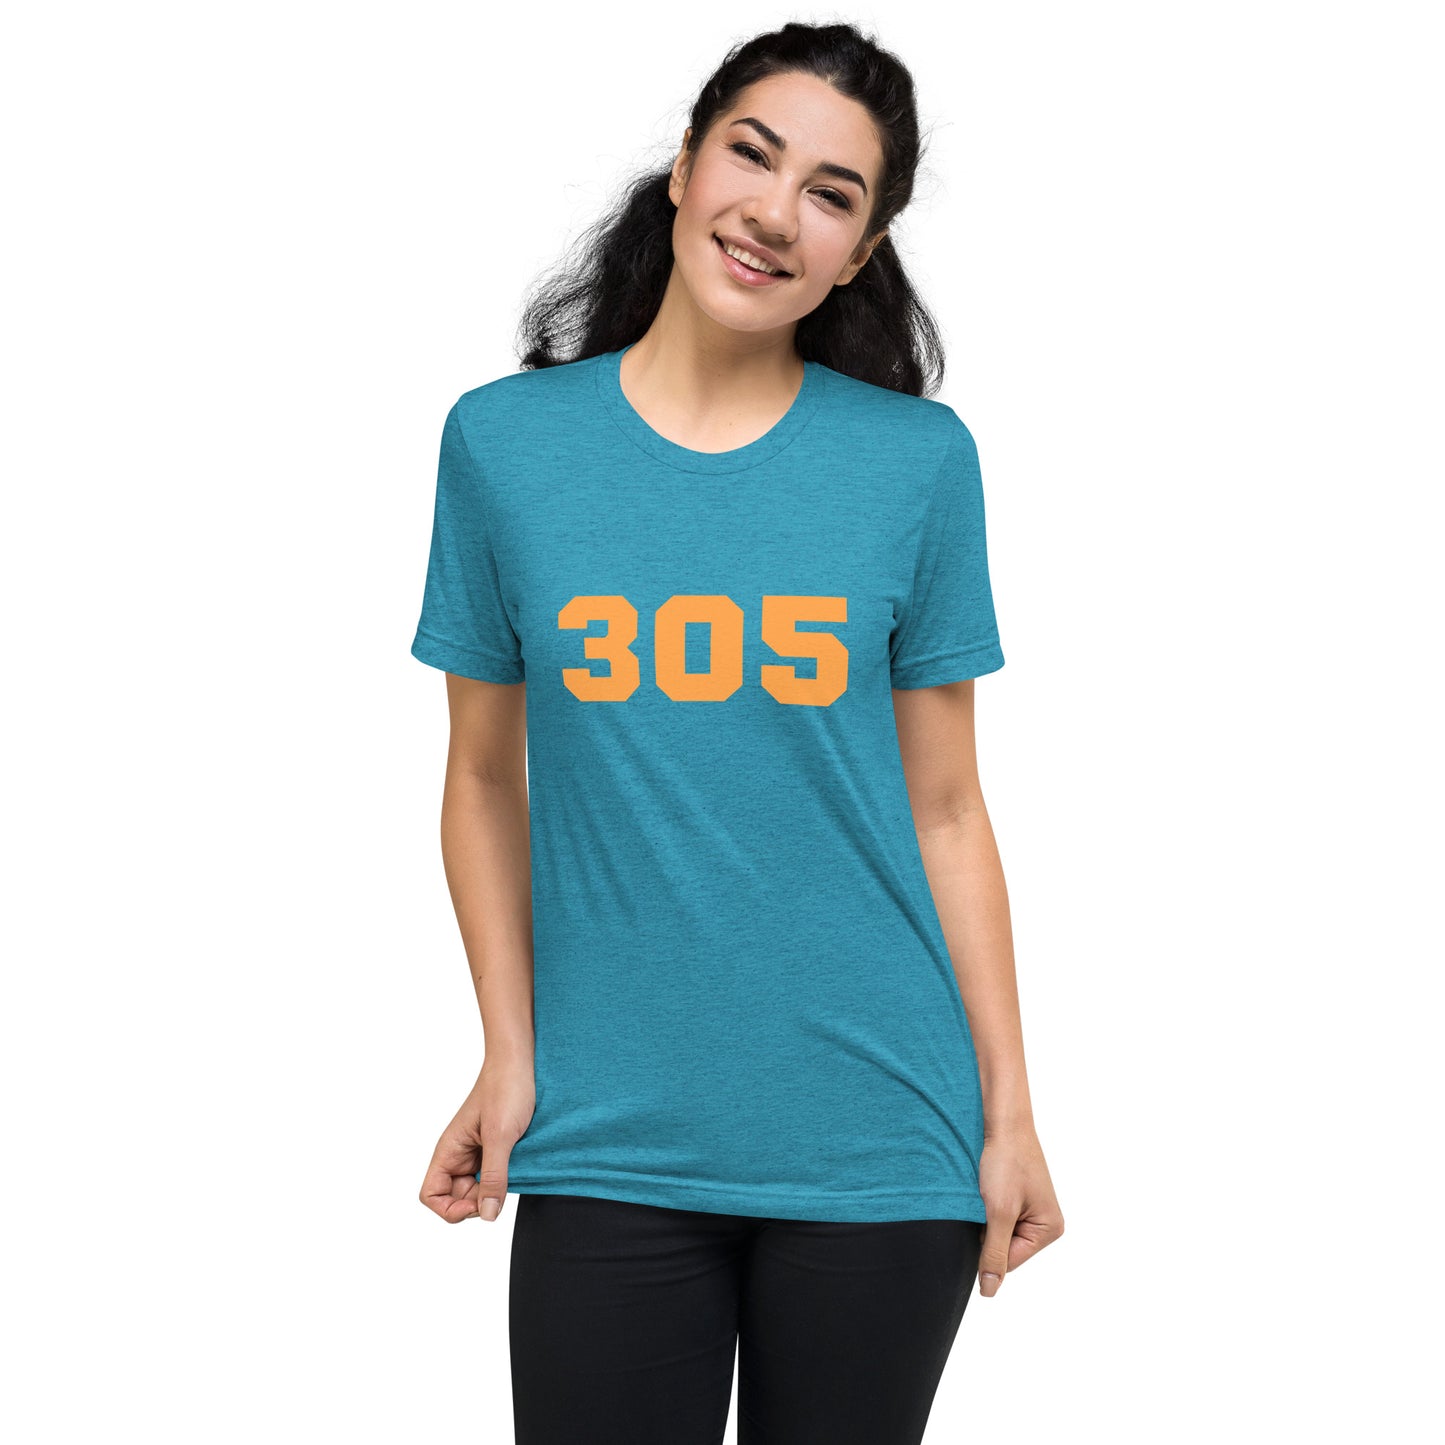 305 Miami Short Sleeve Tri-blend T-Shirt